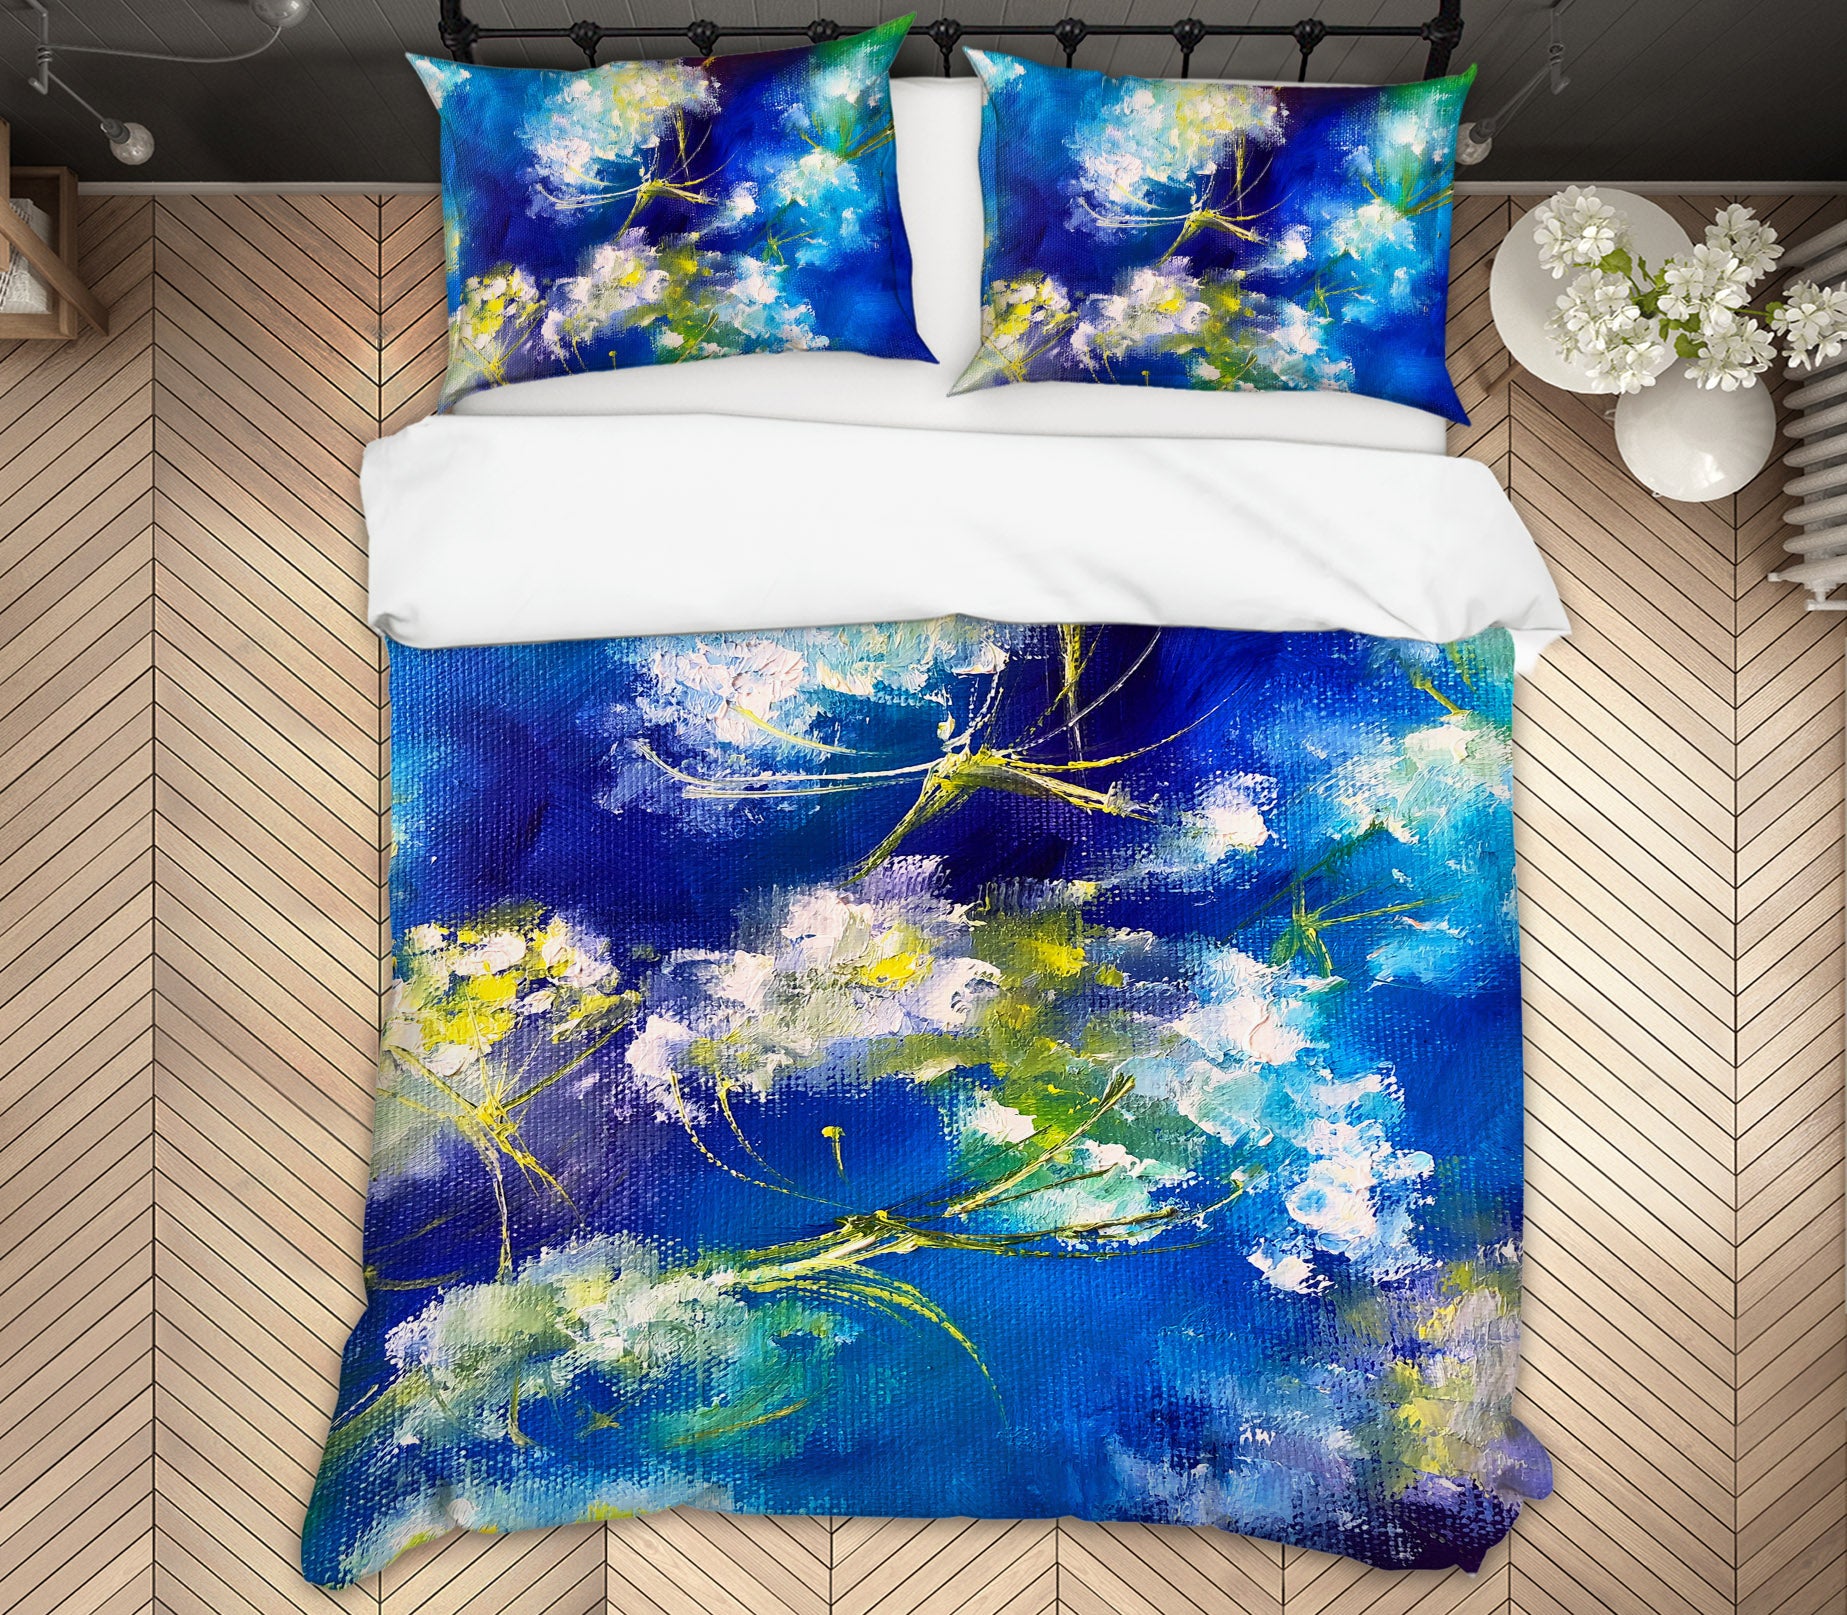 3D Blue Painted Flower 621 Skromova Marina Bedding Bed Pillowcases Quilt